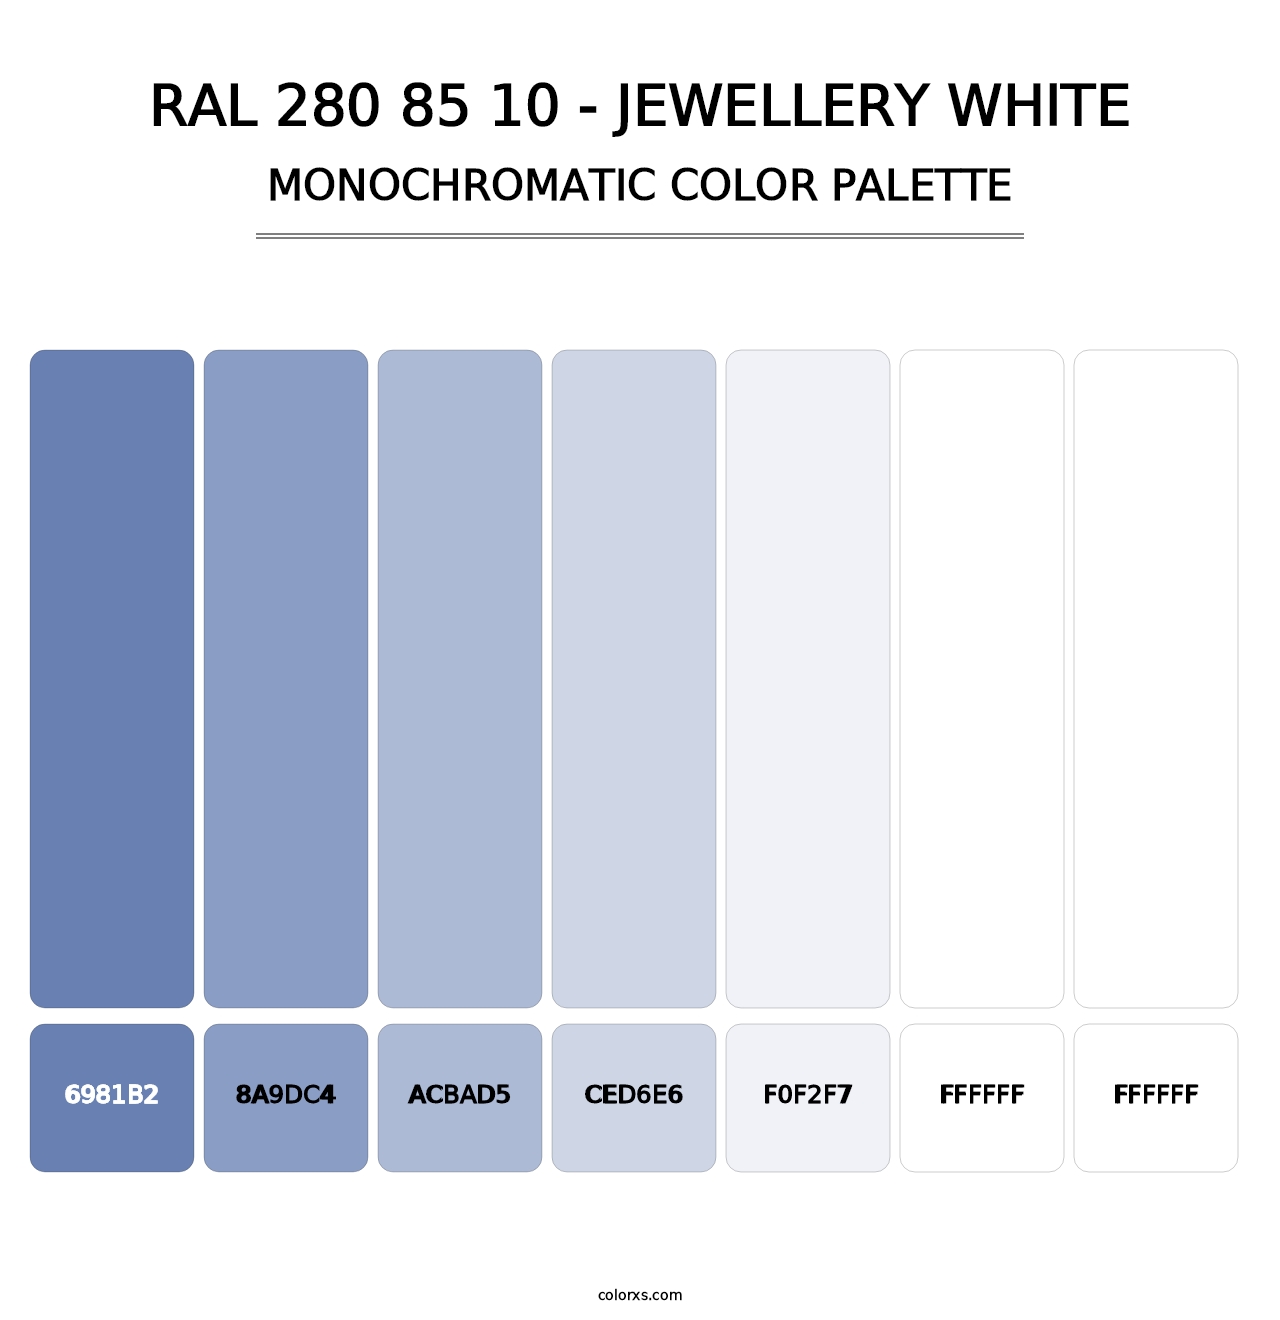 RAL 280 85 10 - Jewellery White - Monochromatic Color Palette